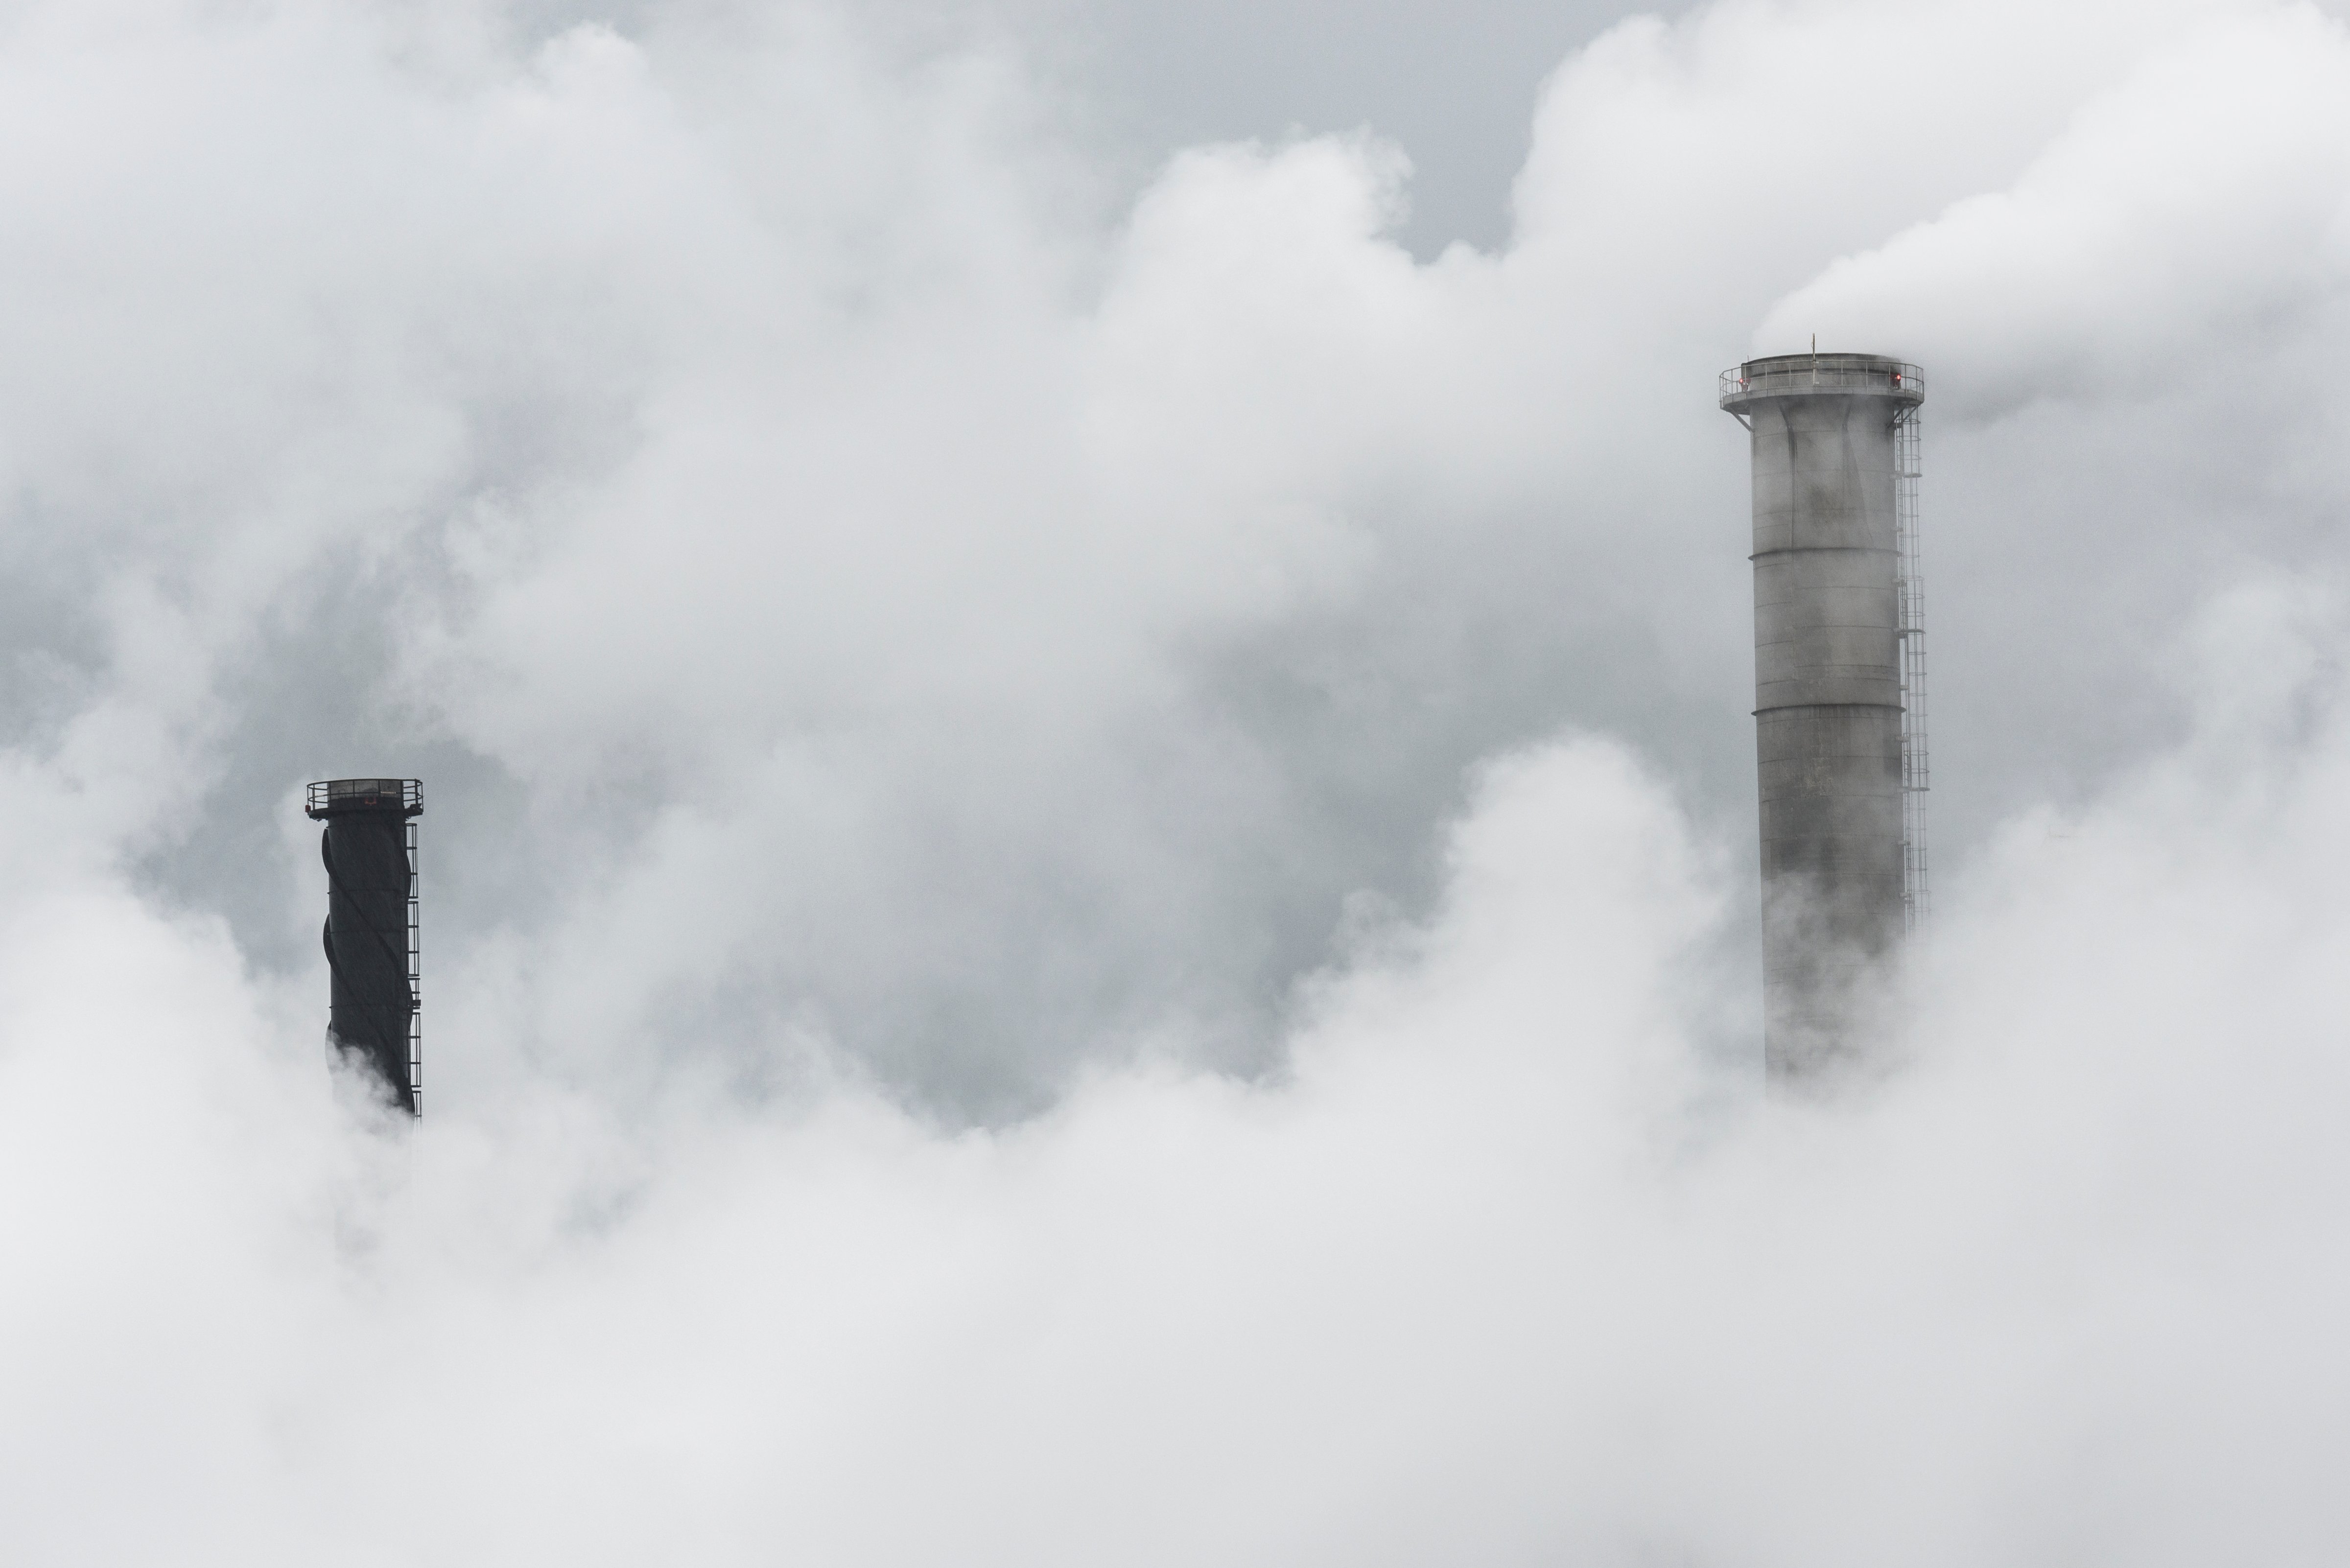 Factory chimneys in smoke